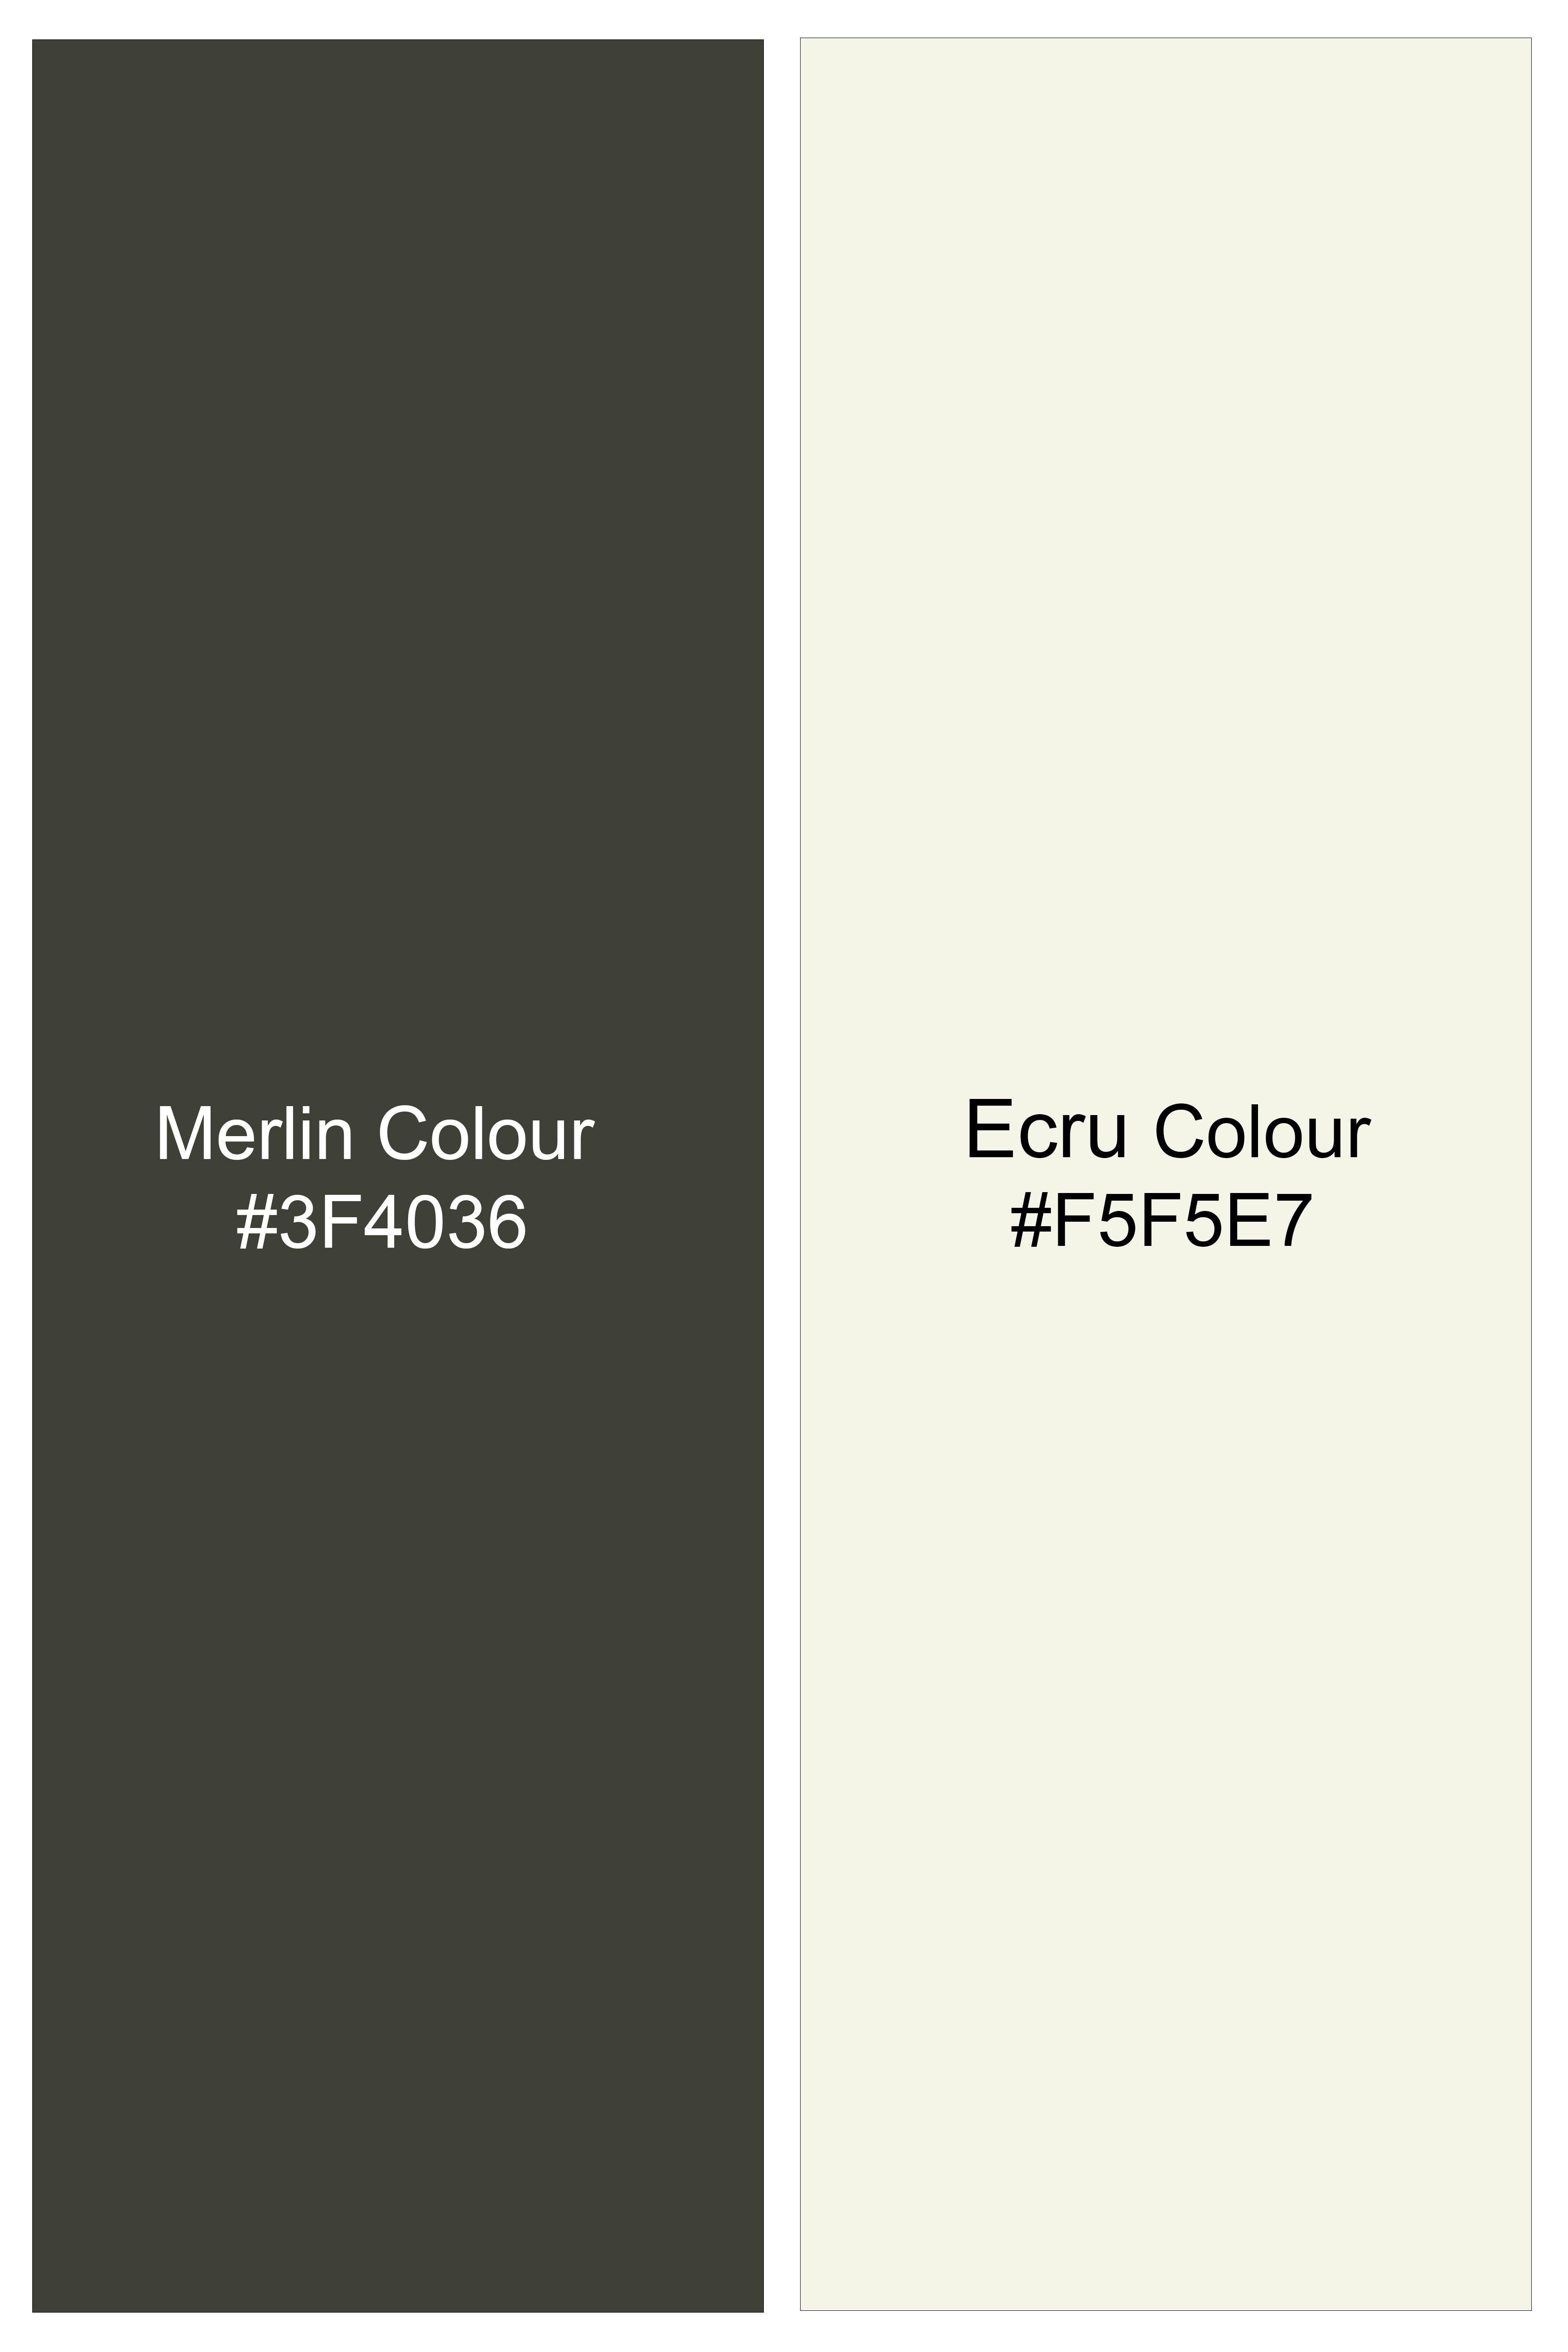 Merlin Green Checks Plaid Twill Premium Cotton Shirt